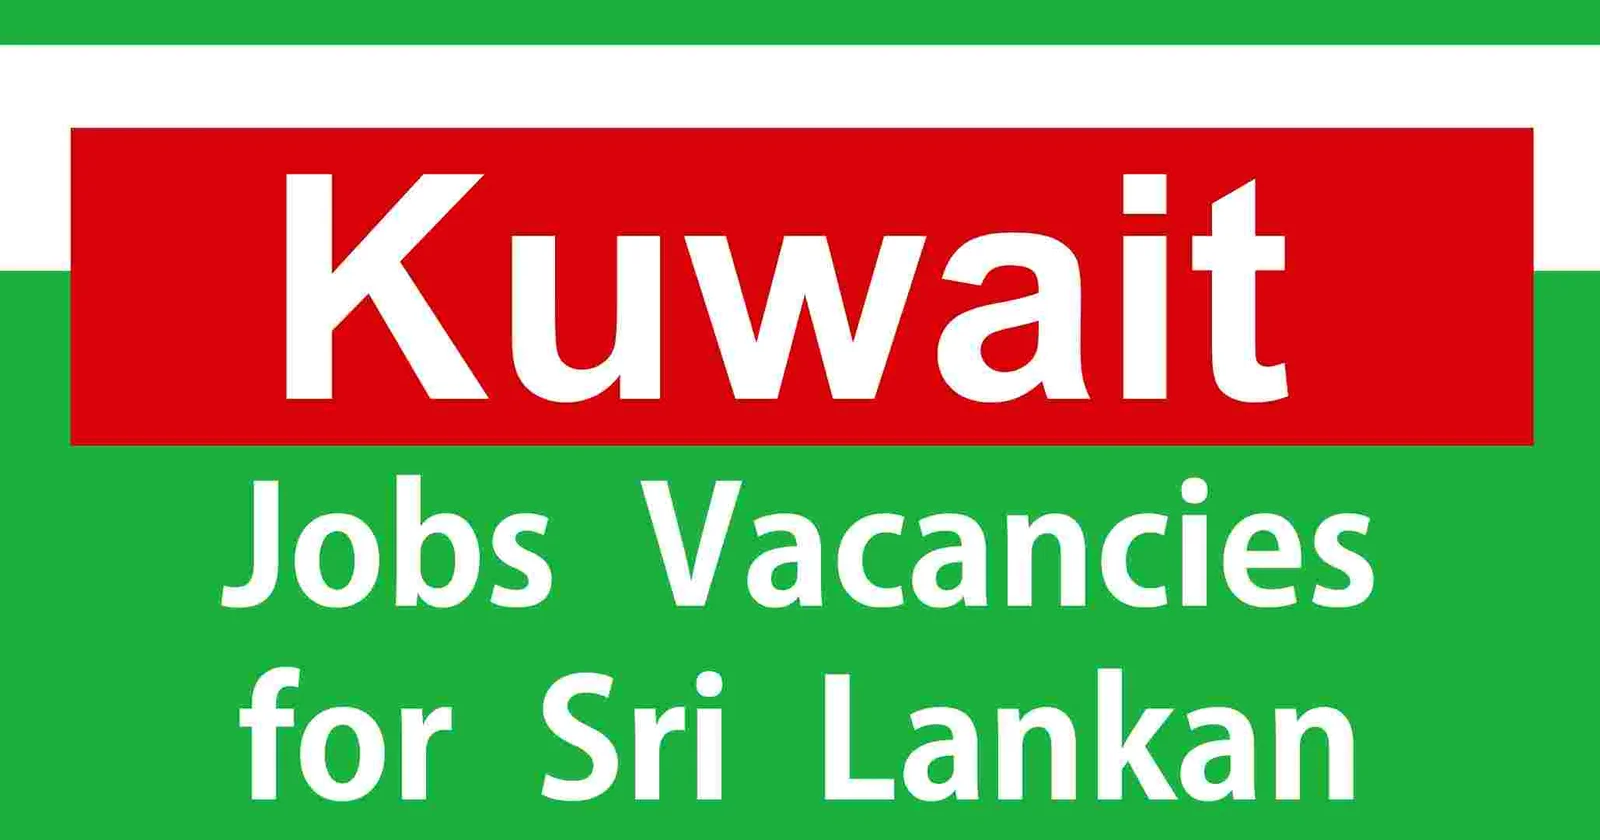 Kuwait Job Vacancies for Sri Lankan